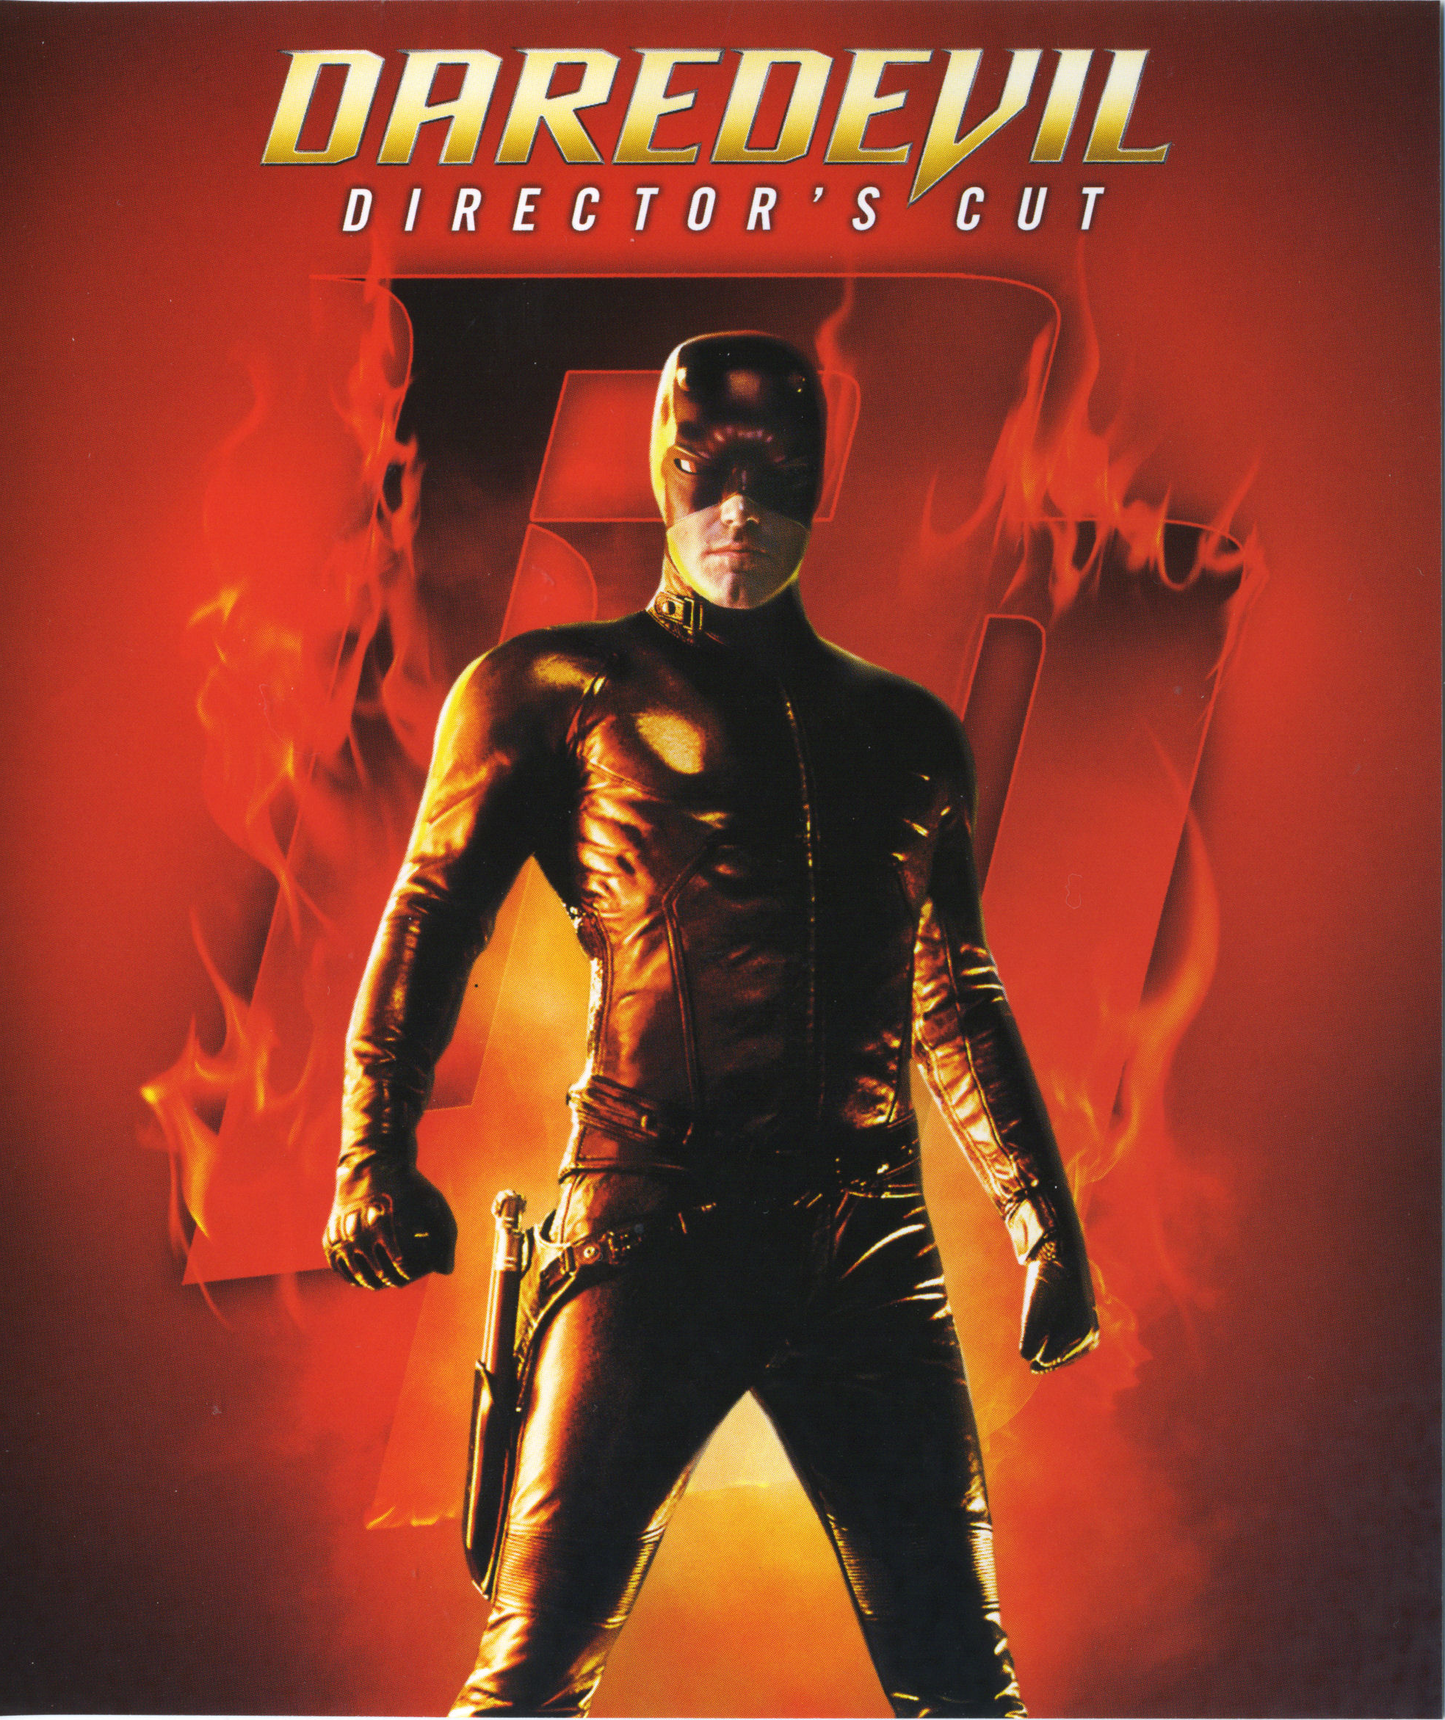 Daredevil - Blu-ray Action/Adventure 2003 PG-13